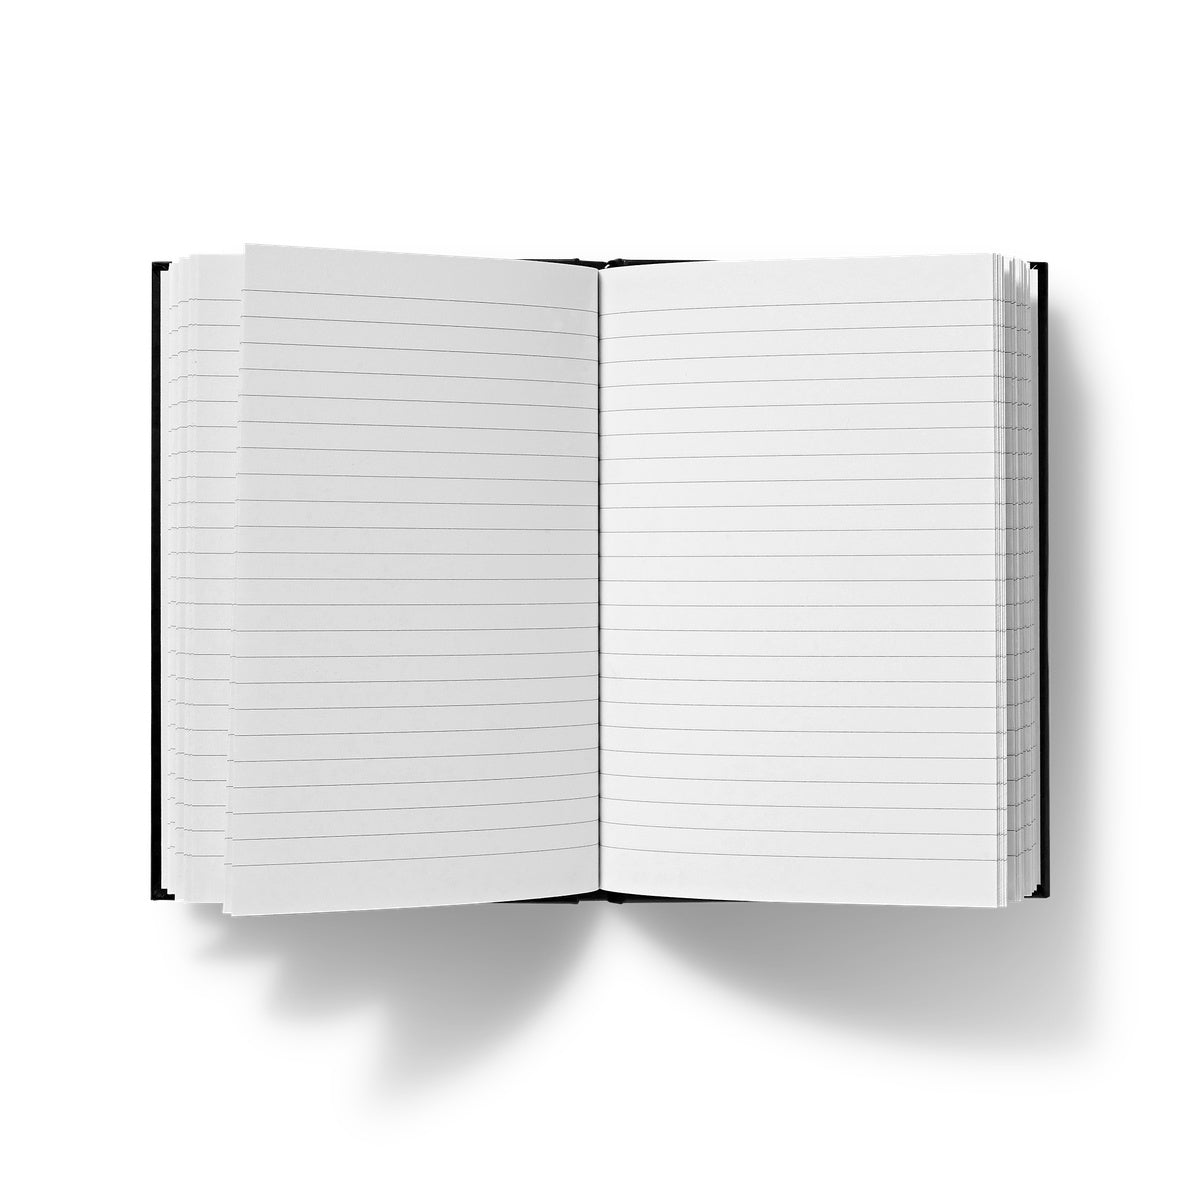 Gratitude Notebook Thalassophile Hardback Journal - Young by Design